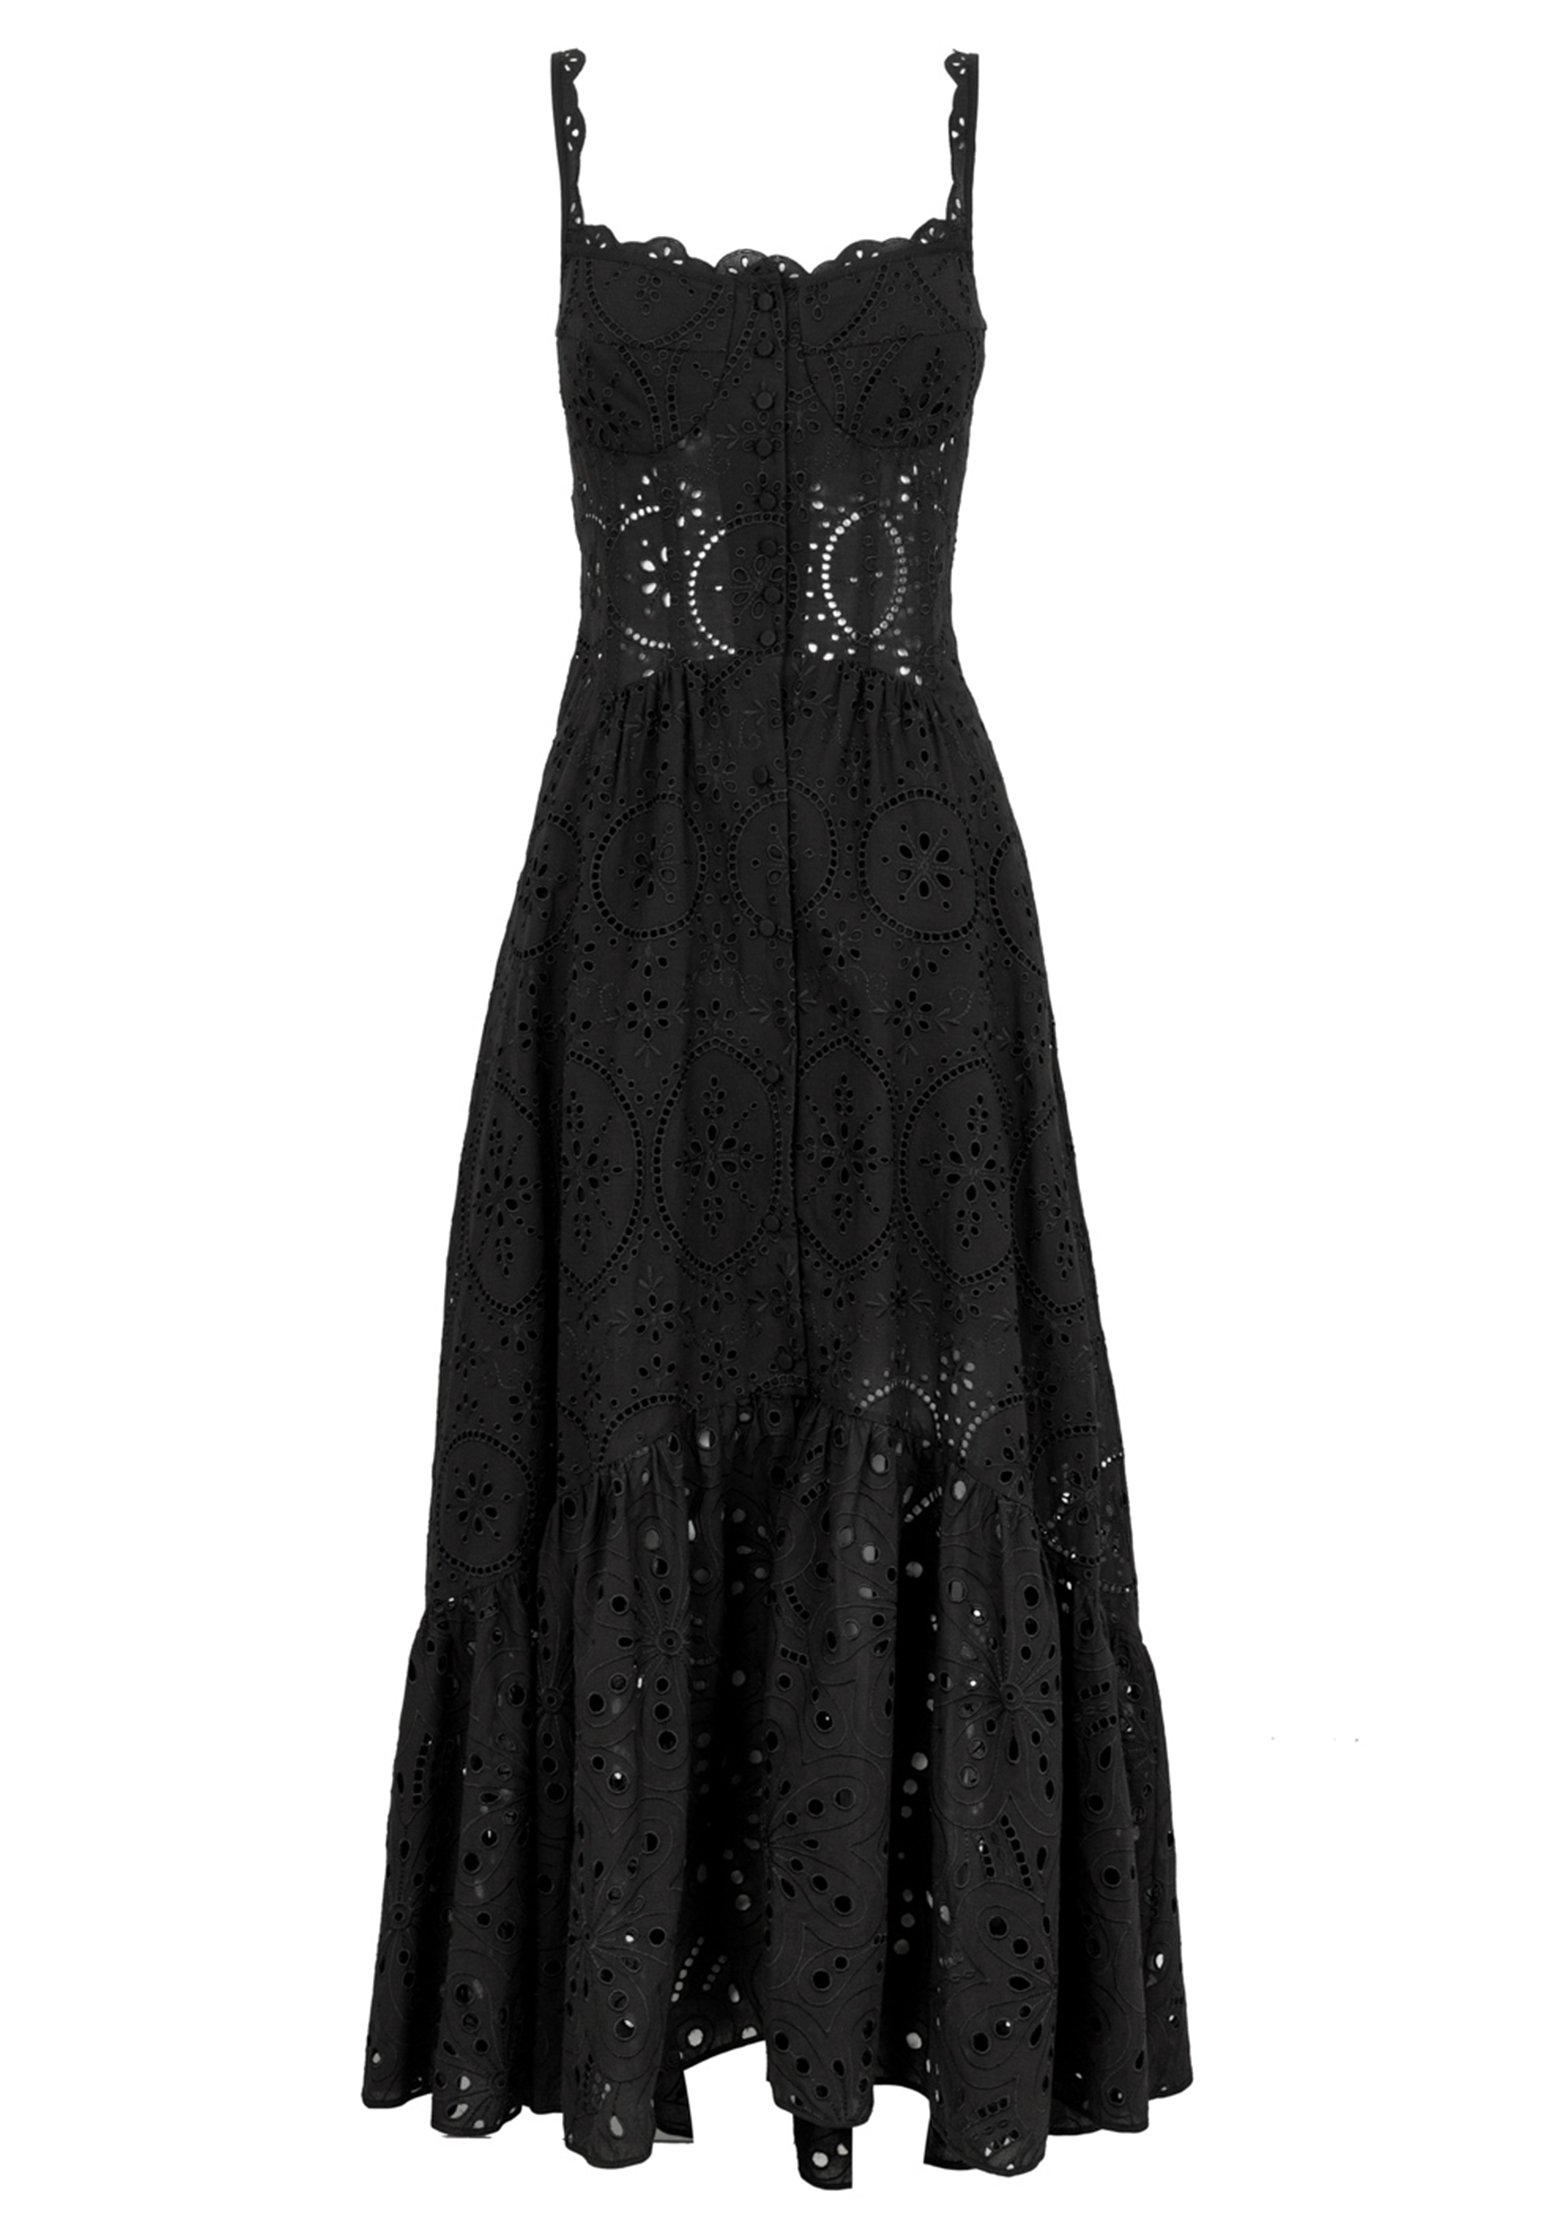 Dress CHARO RUIZ Color: black (Code: 2037) in online store Allure